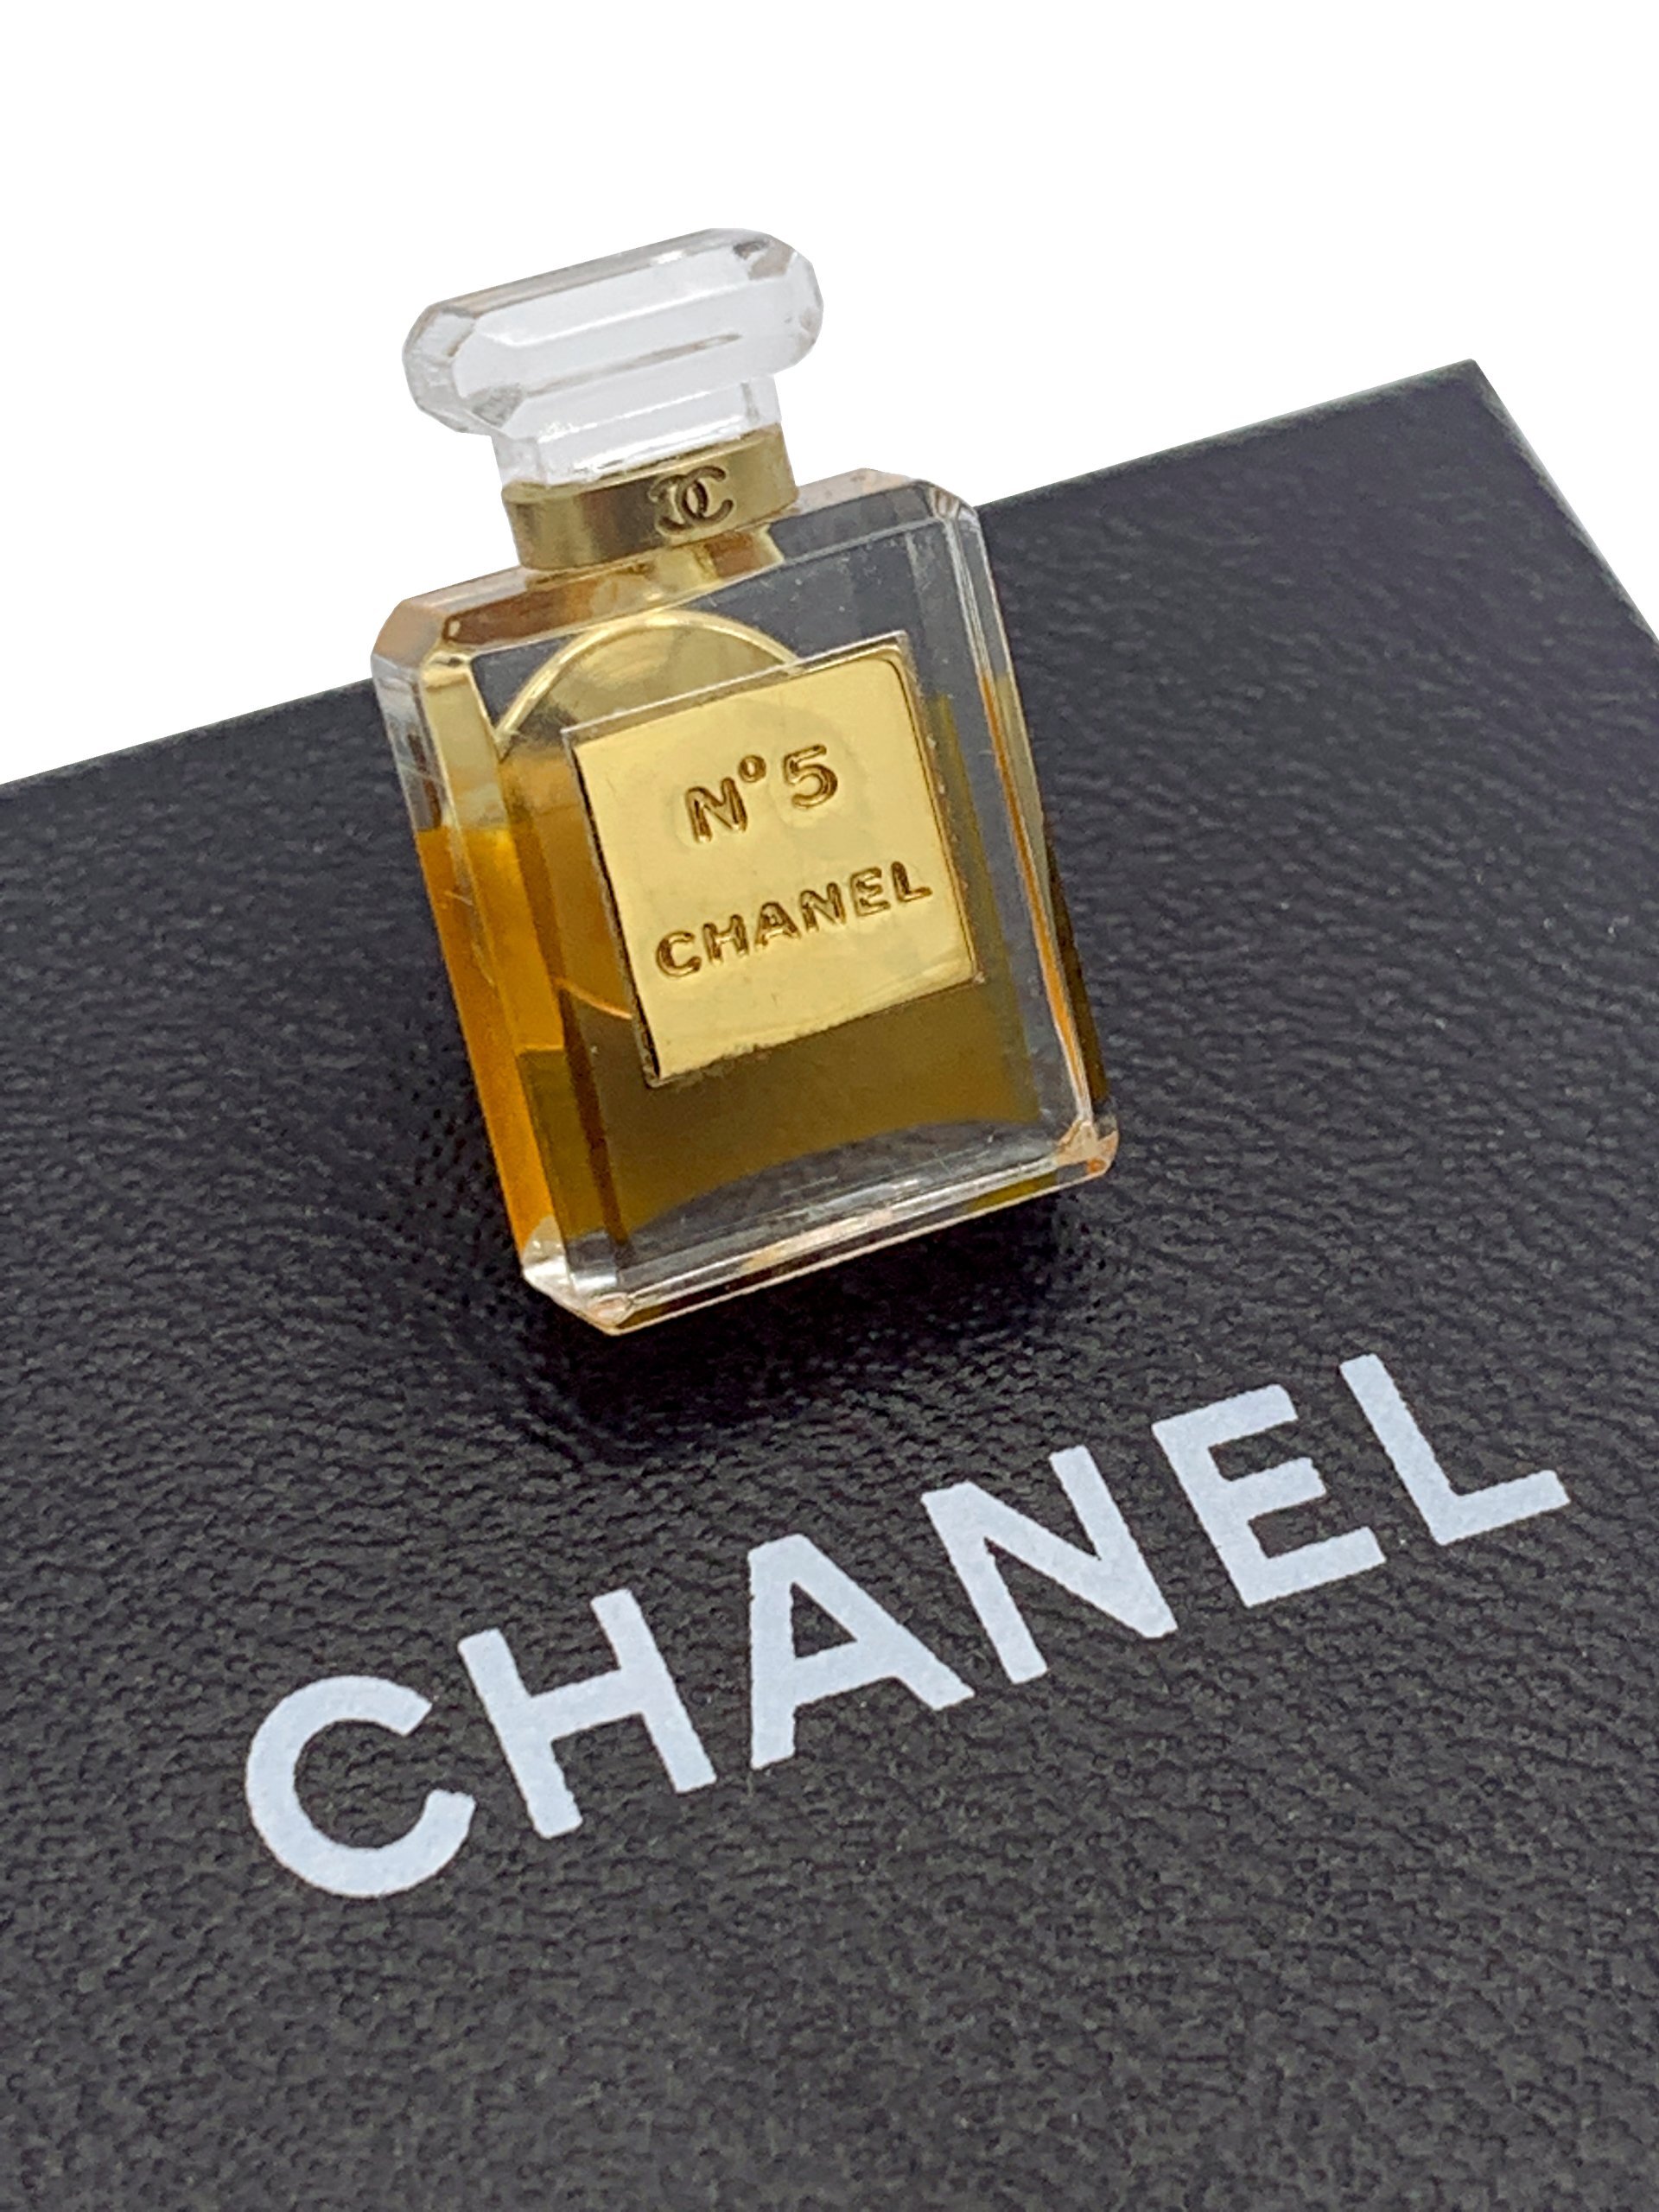 Perfume Chanel Brooch 